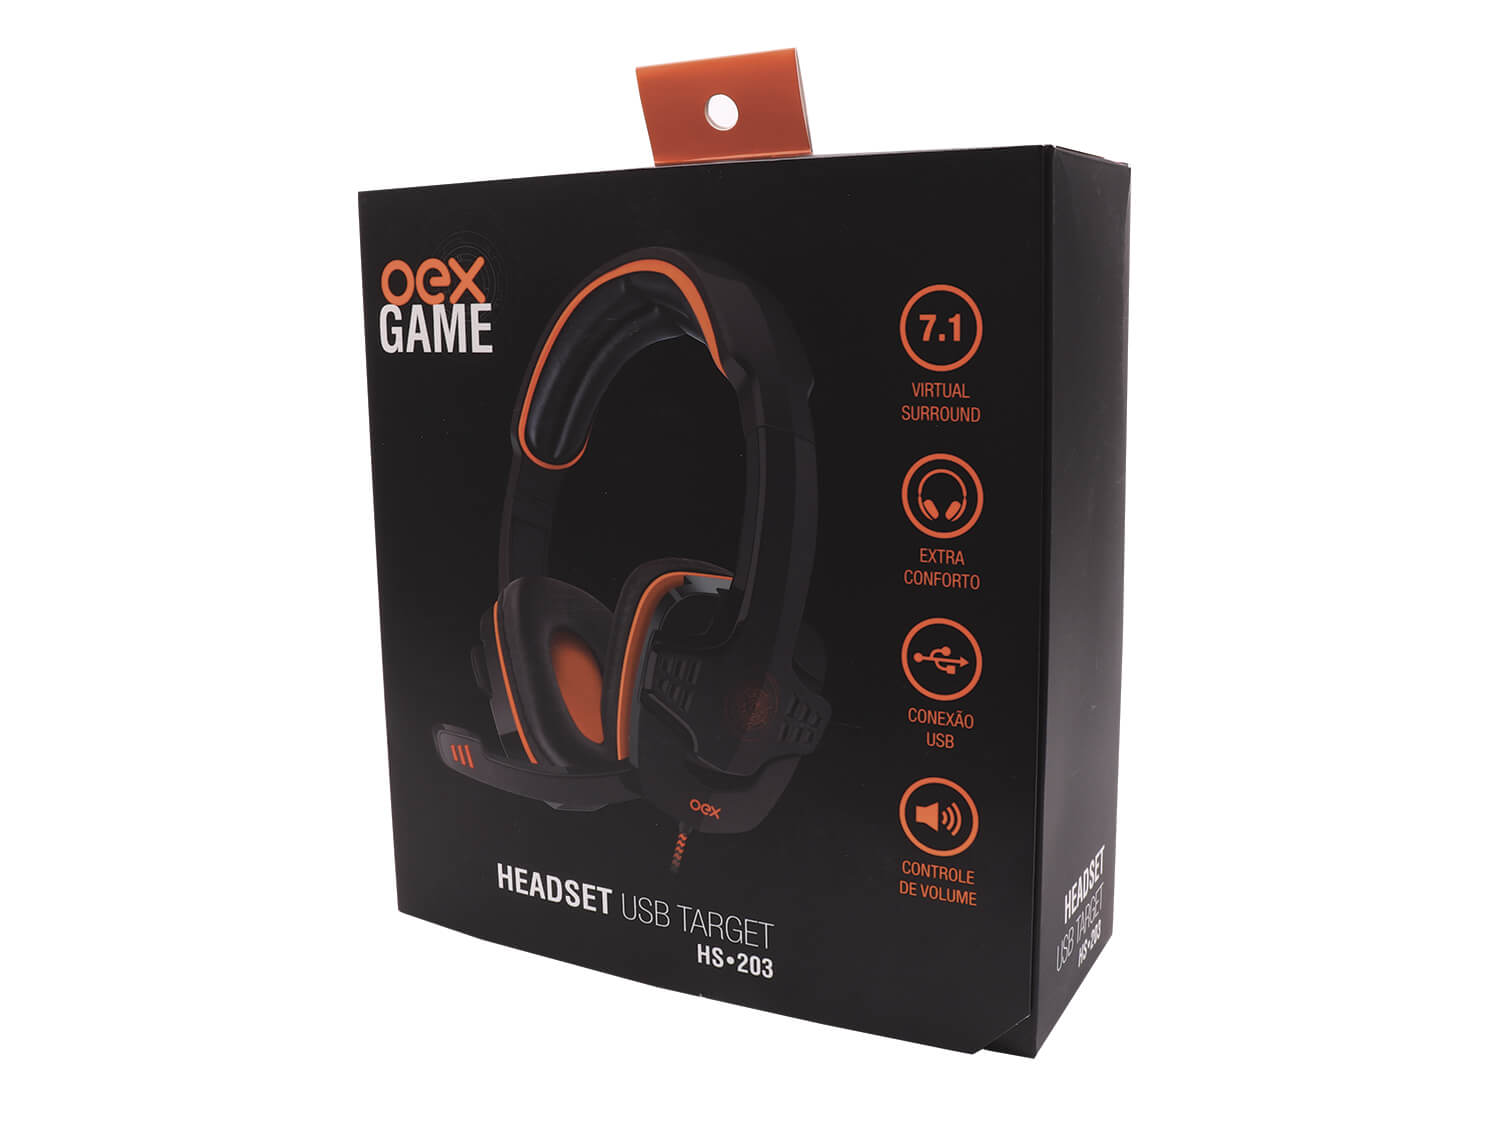 Headset OEX Game HS 203 USB Target